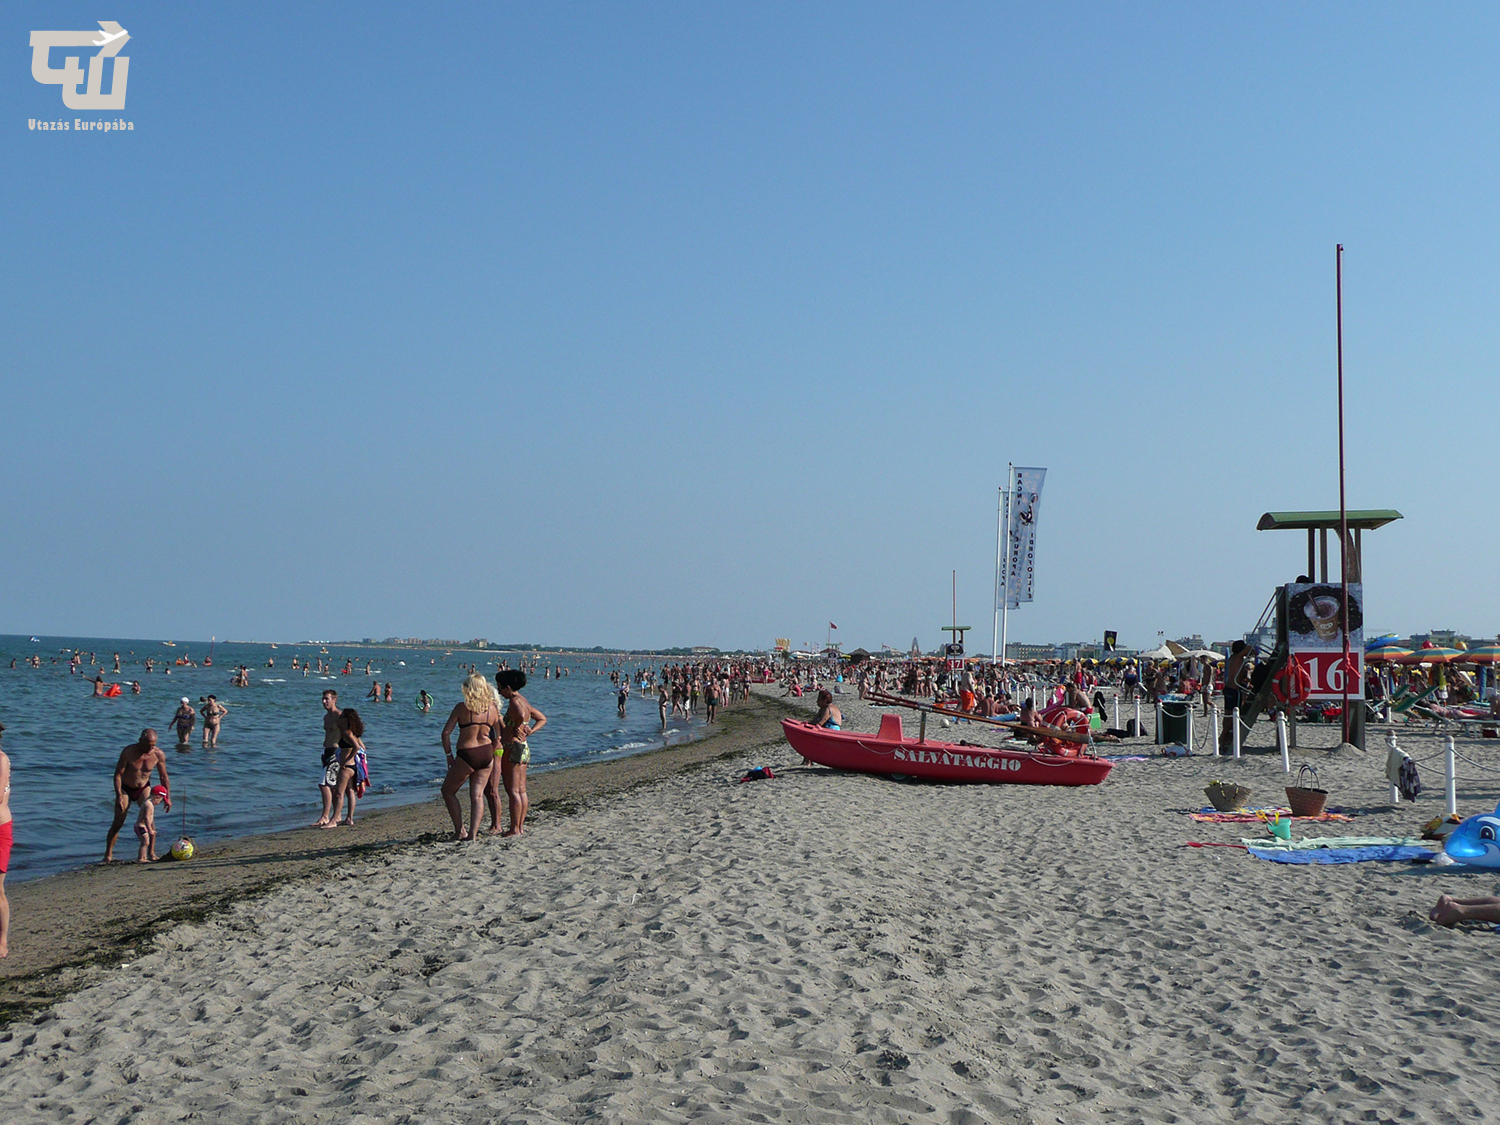 15_sottomarina_adriai-tenger_tengerpart_strand_beach_spiaggia_veneto_olaszorszag_italy_italia_italien_utazas_europaba.JPG